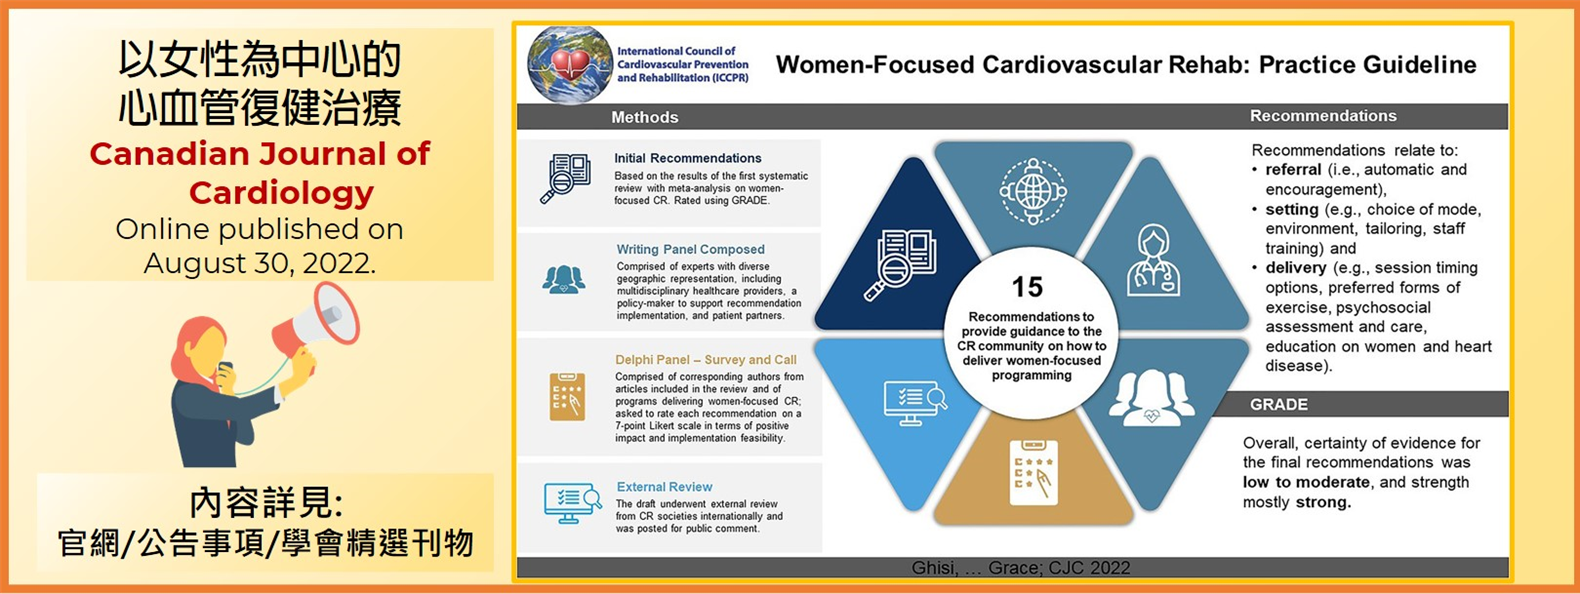 Women-Focused Cardiovascular Rehabilitation